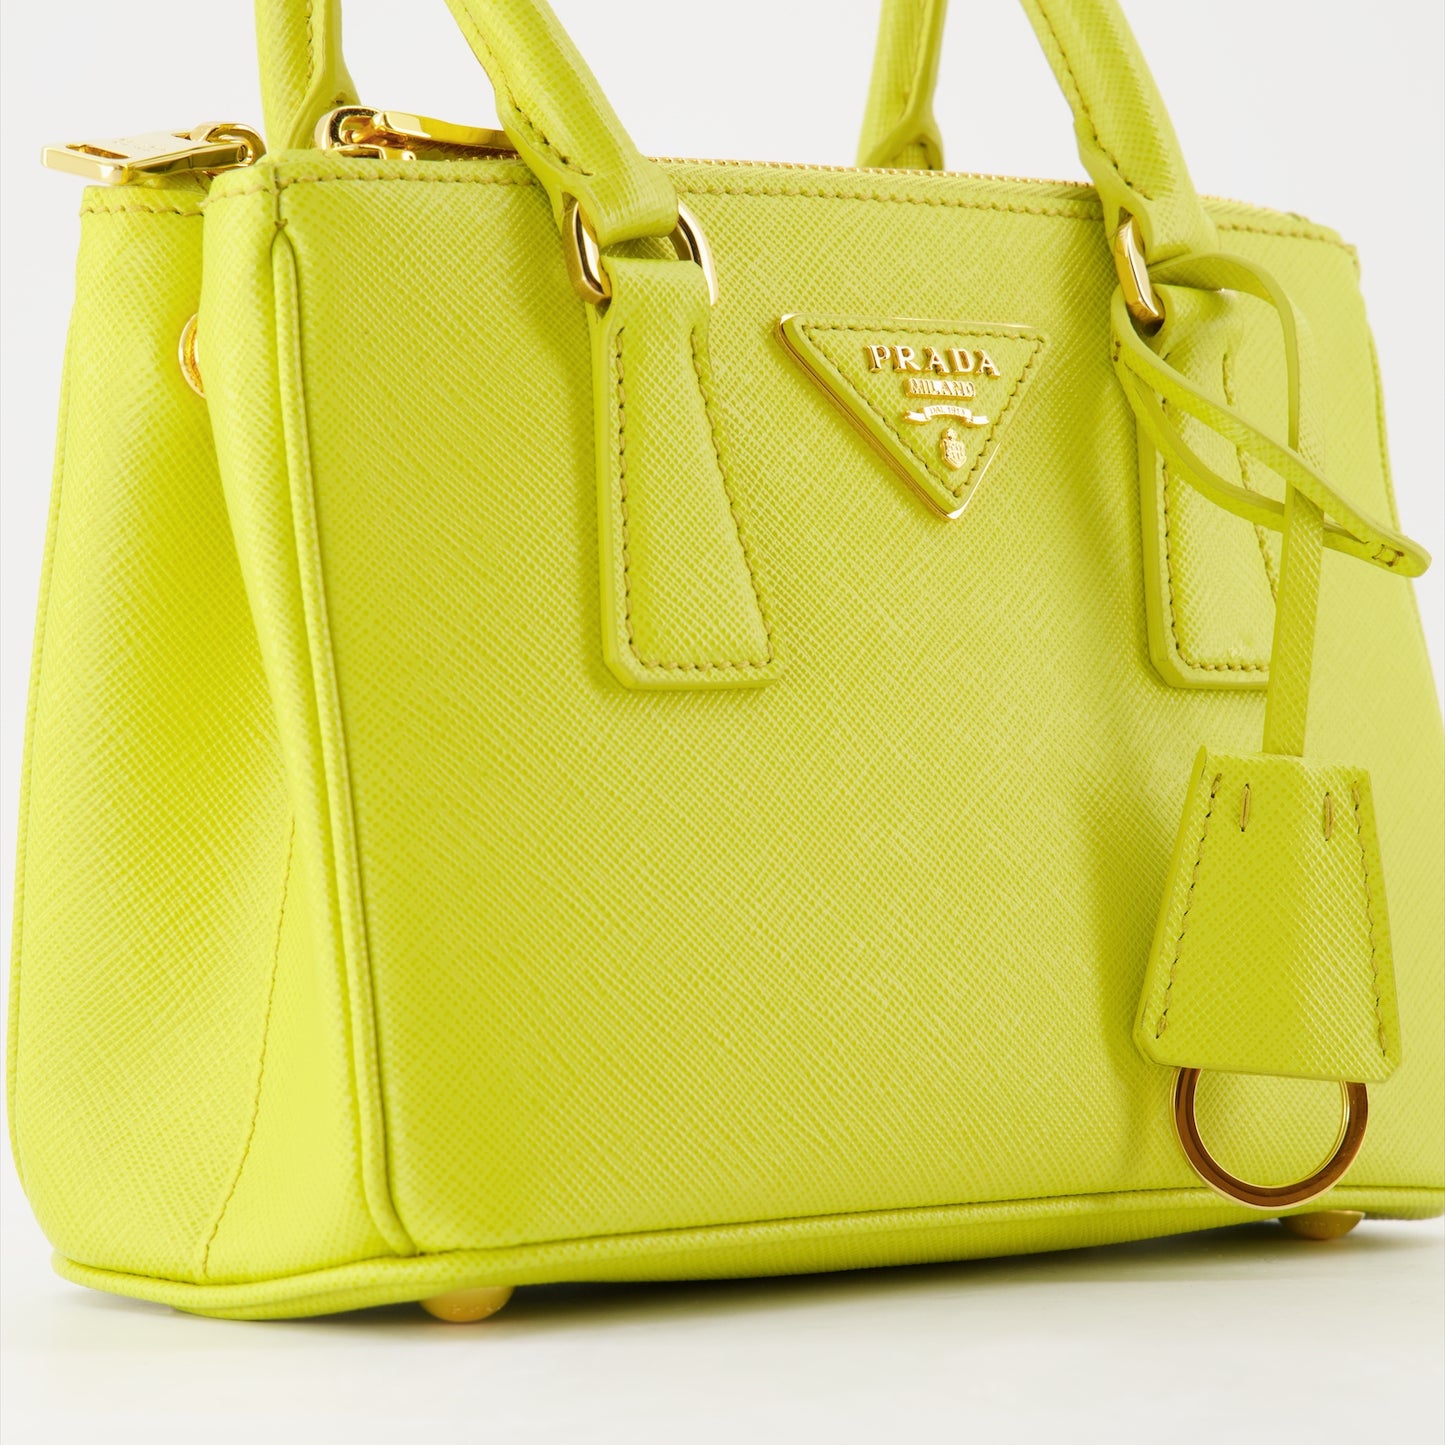 Galleria Saffiano Yellow Bag